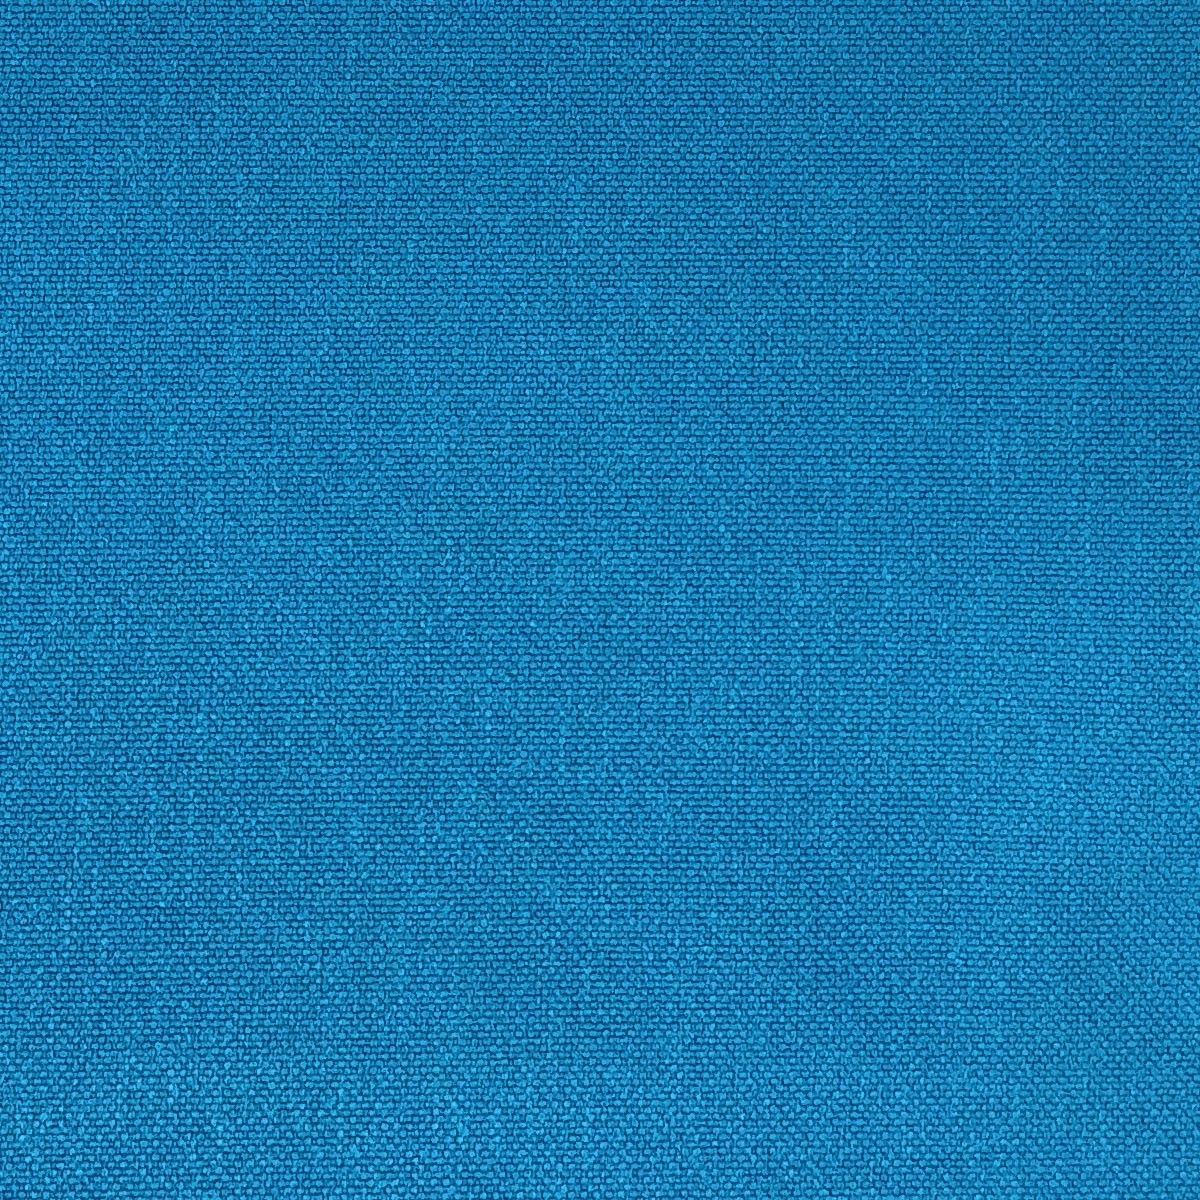 Glinara Turquoise Fabric by Chatham Glyn